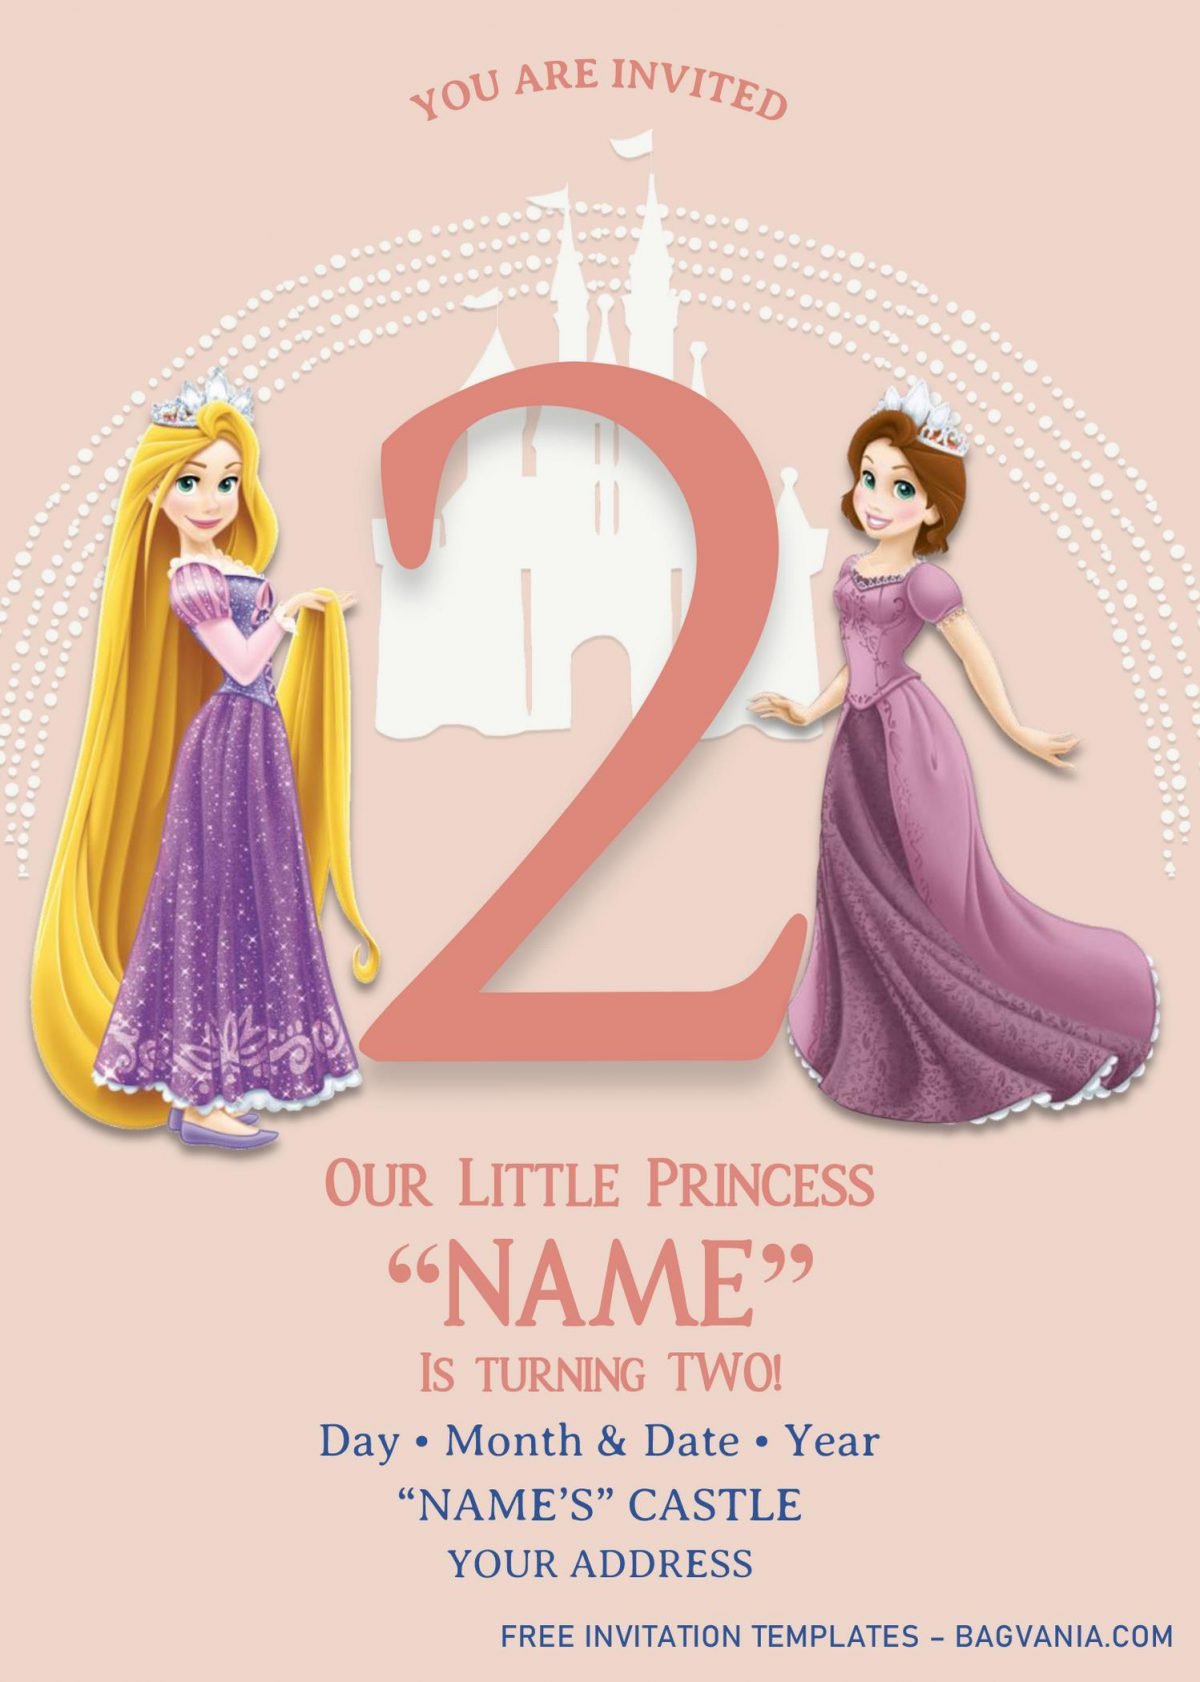 Disney Princess Birthday Invitation Templates - Editable With MS Word and has white princess castle